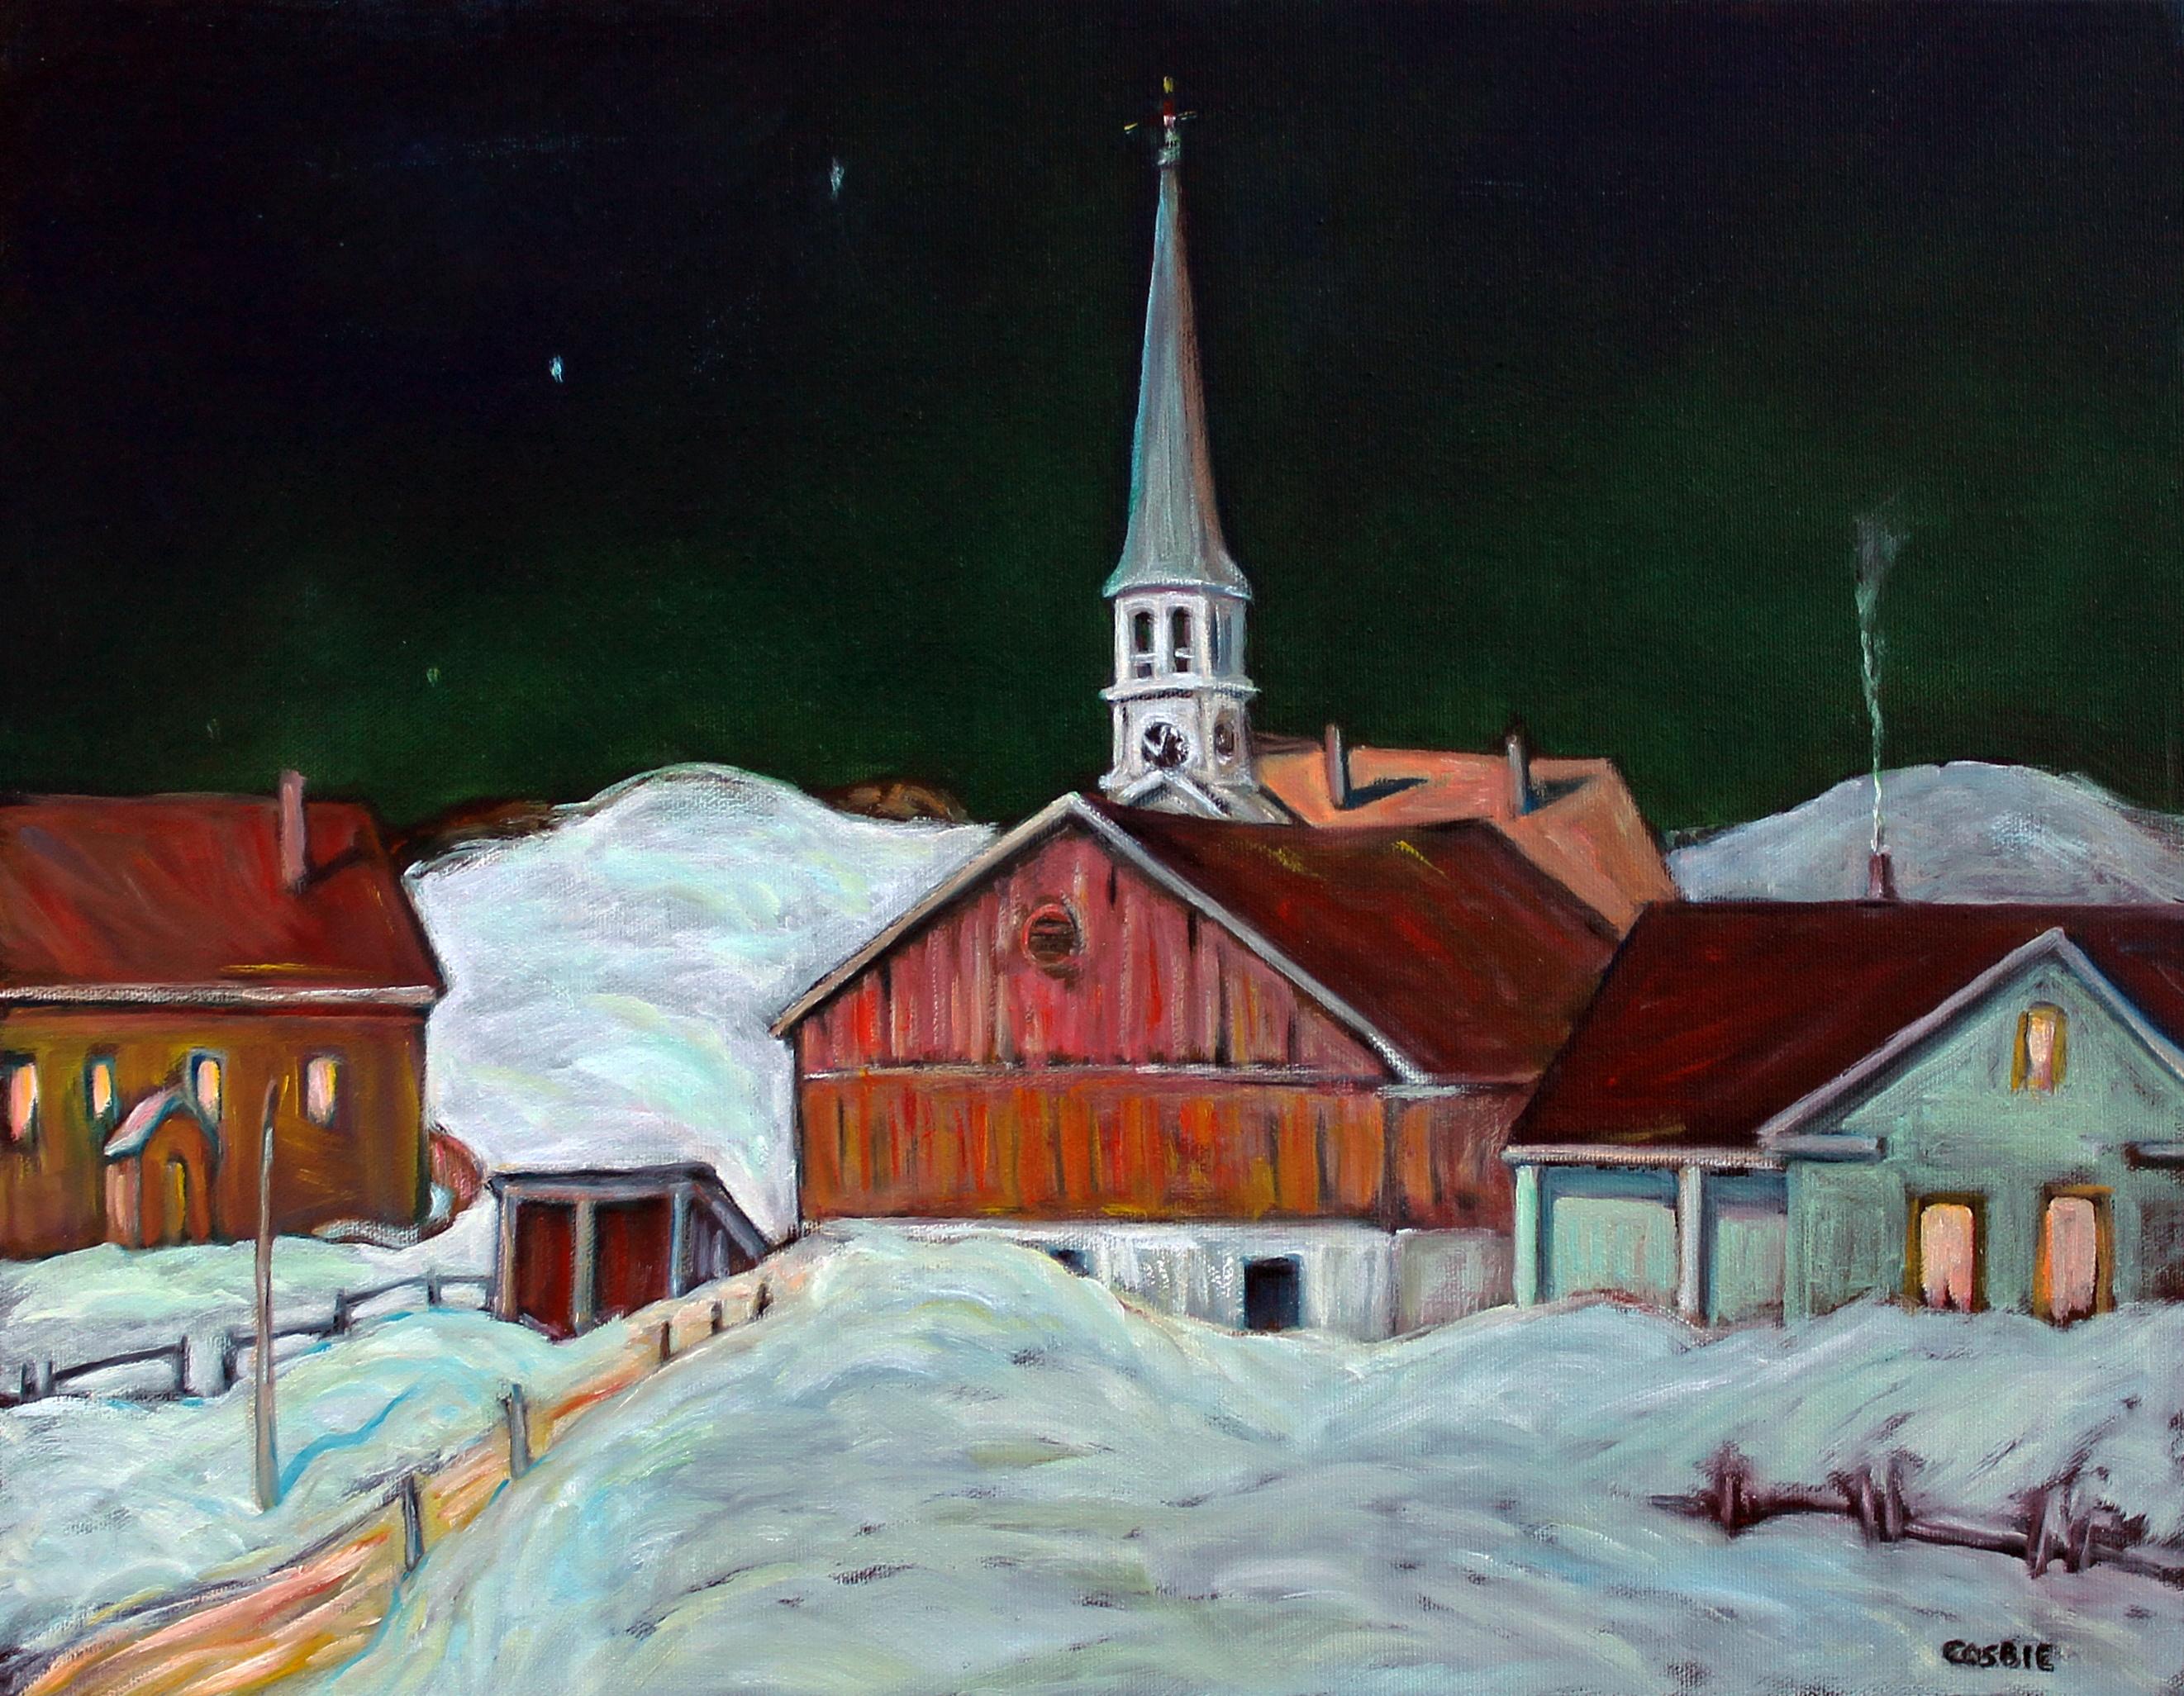 Peacham Vermont Nocturne, Oil Painting - Art by Doug Cosbie